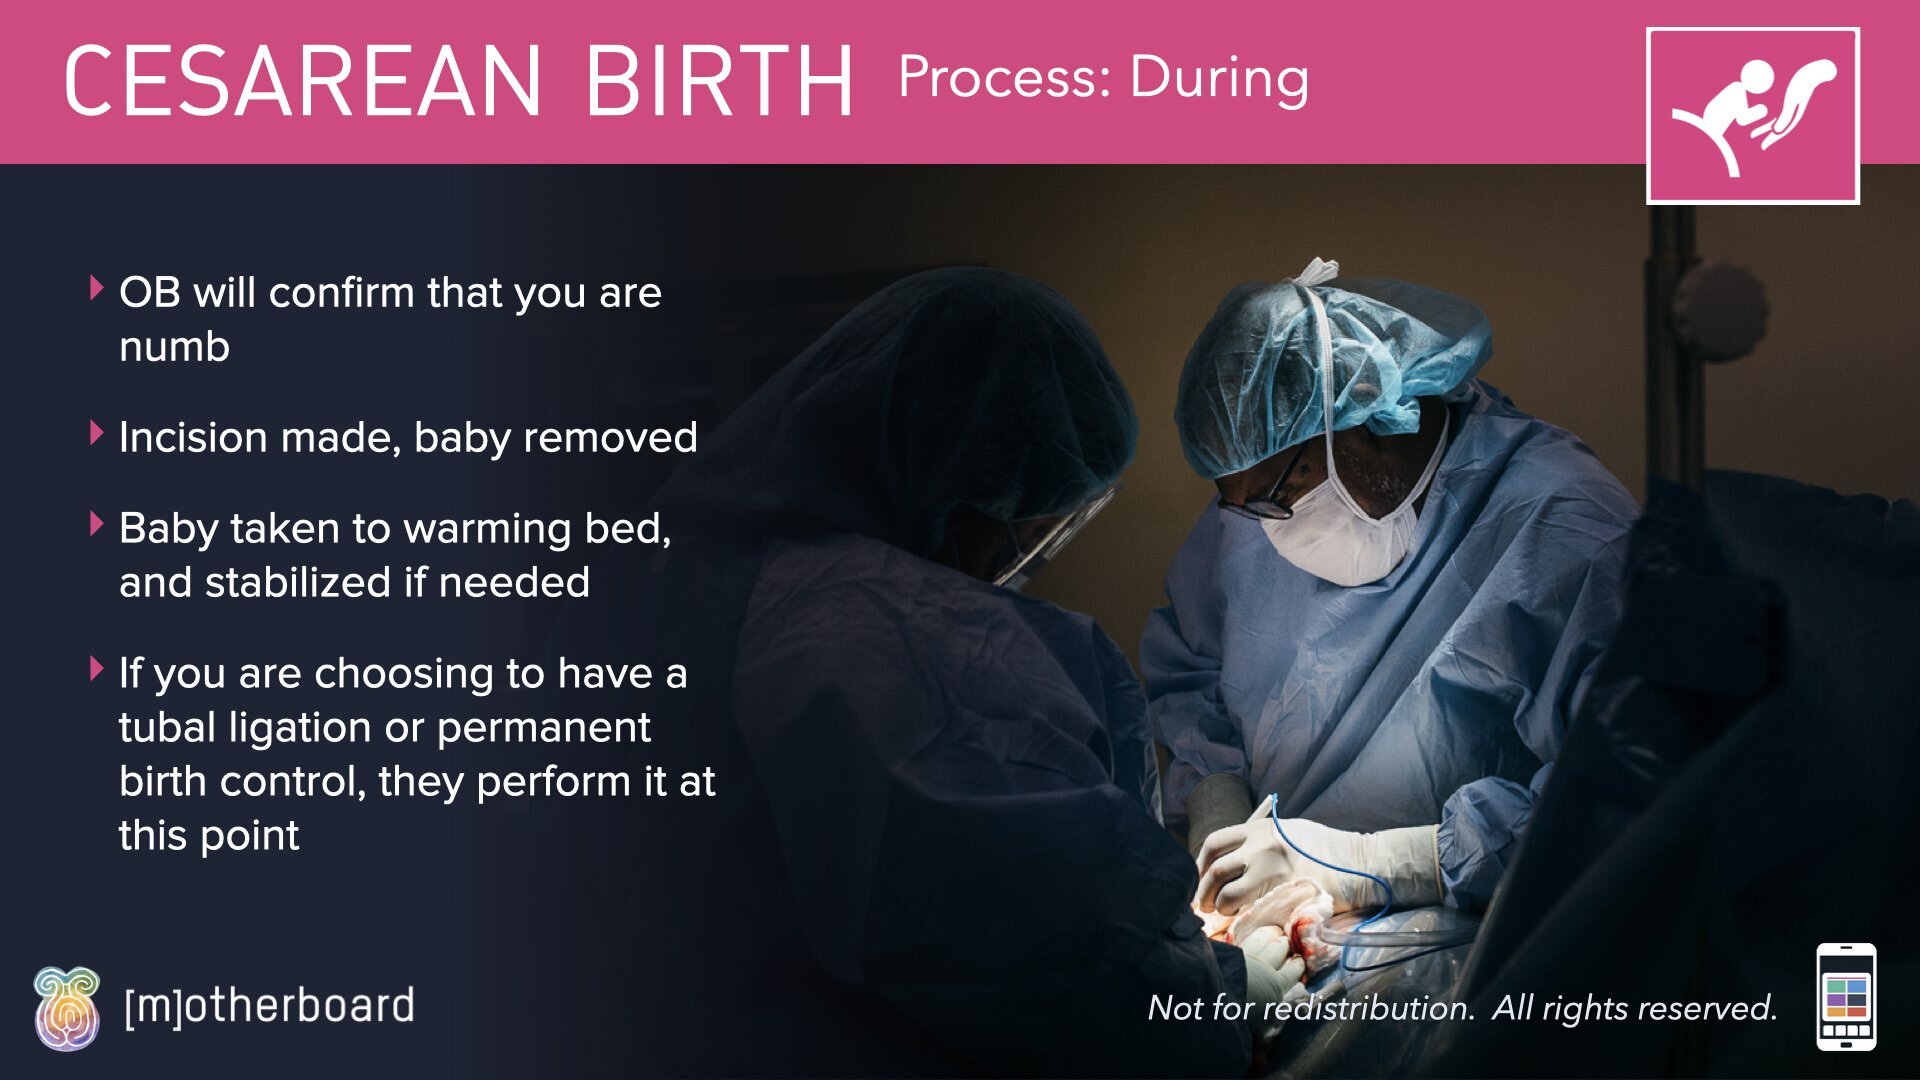 Cesarean Birth Images.004.jpeg